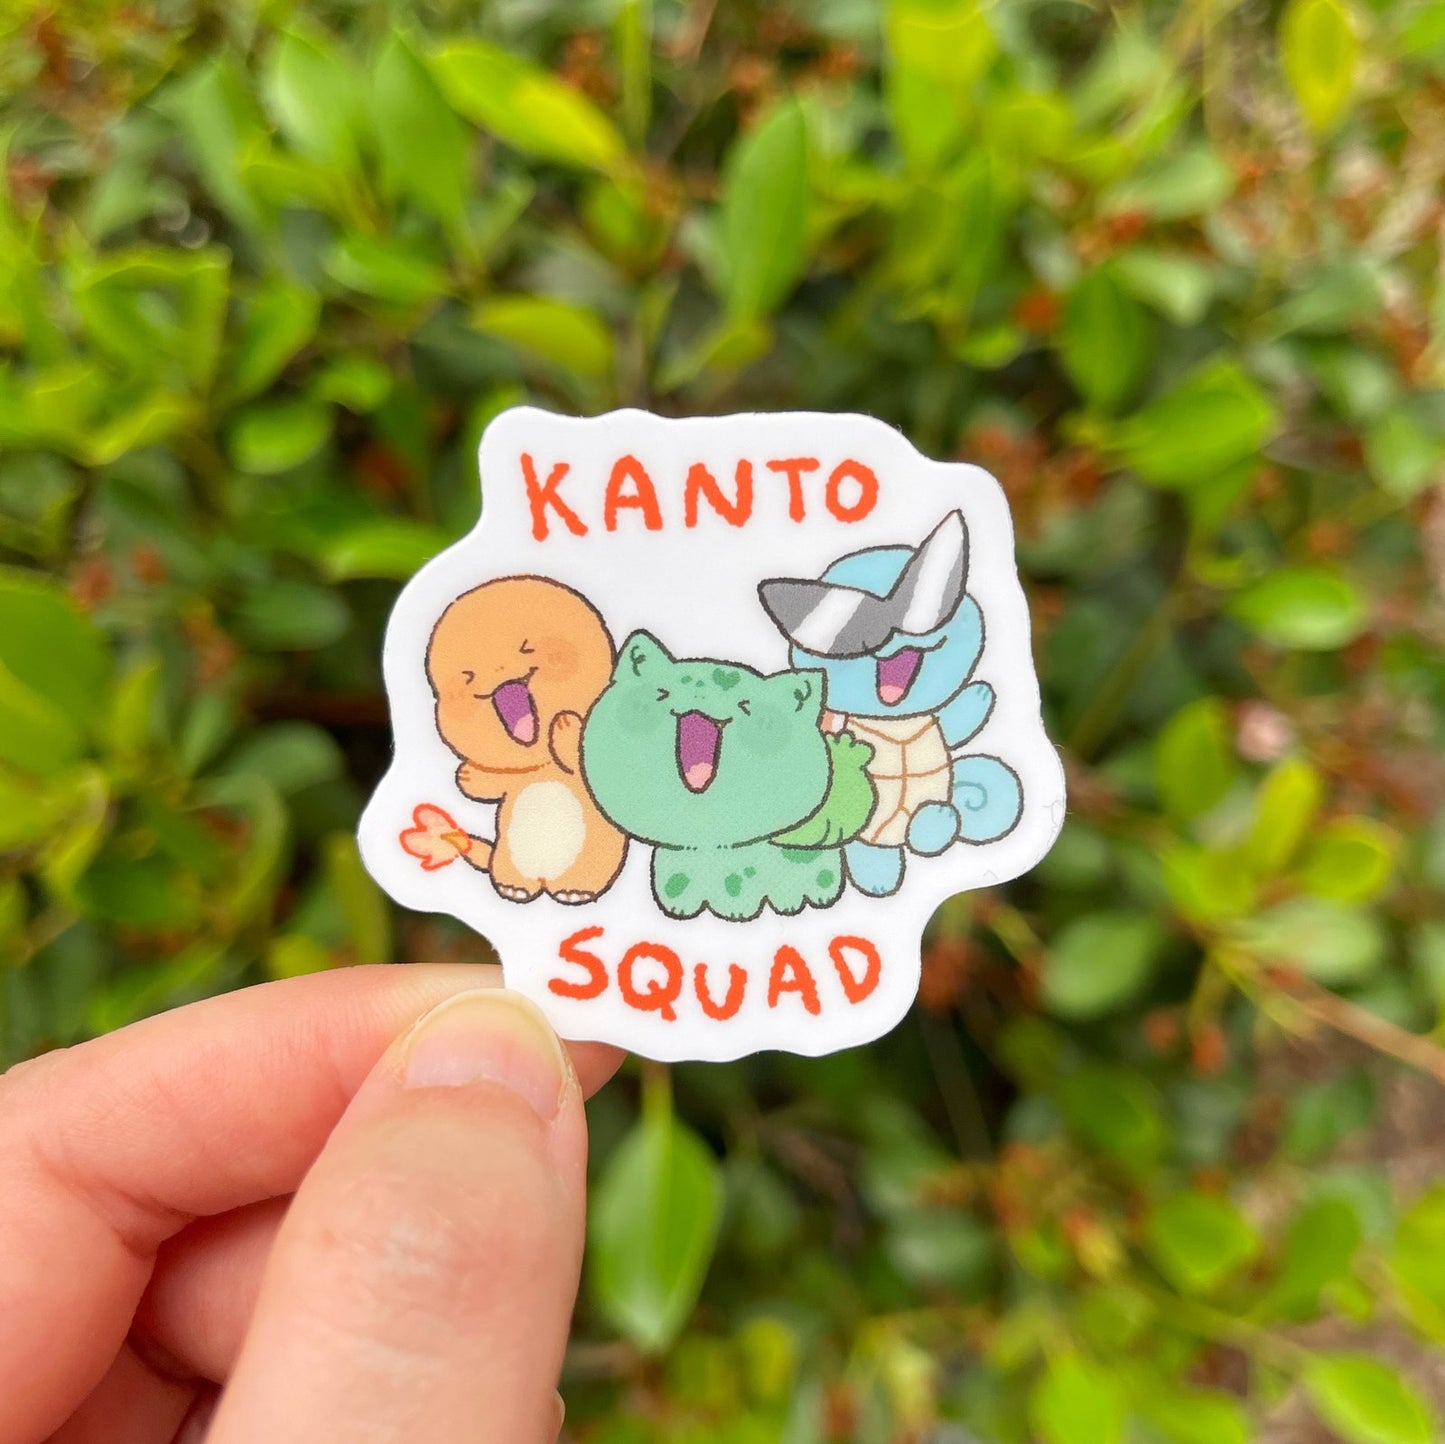 Kanto Squad Sticker